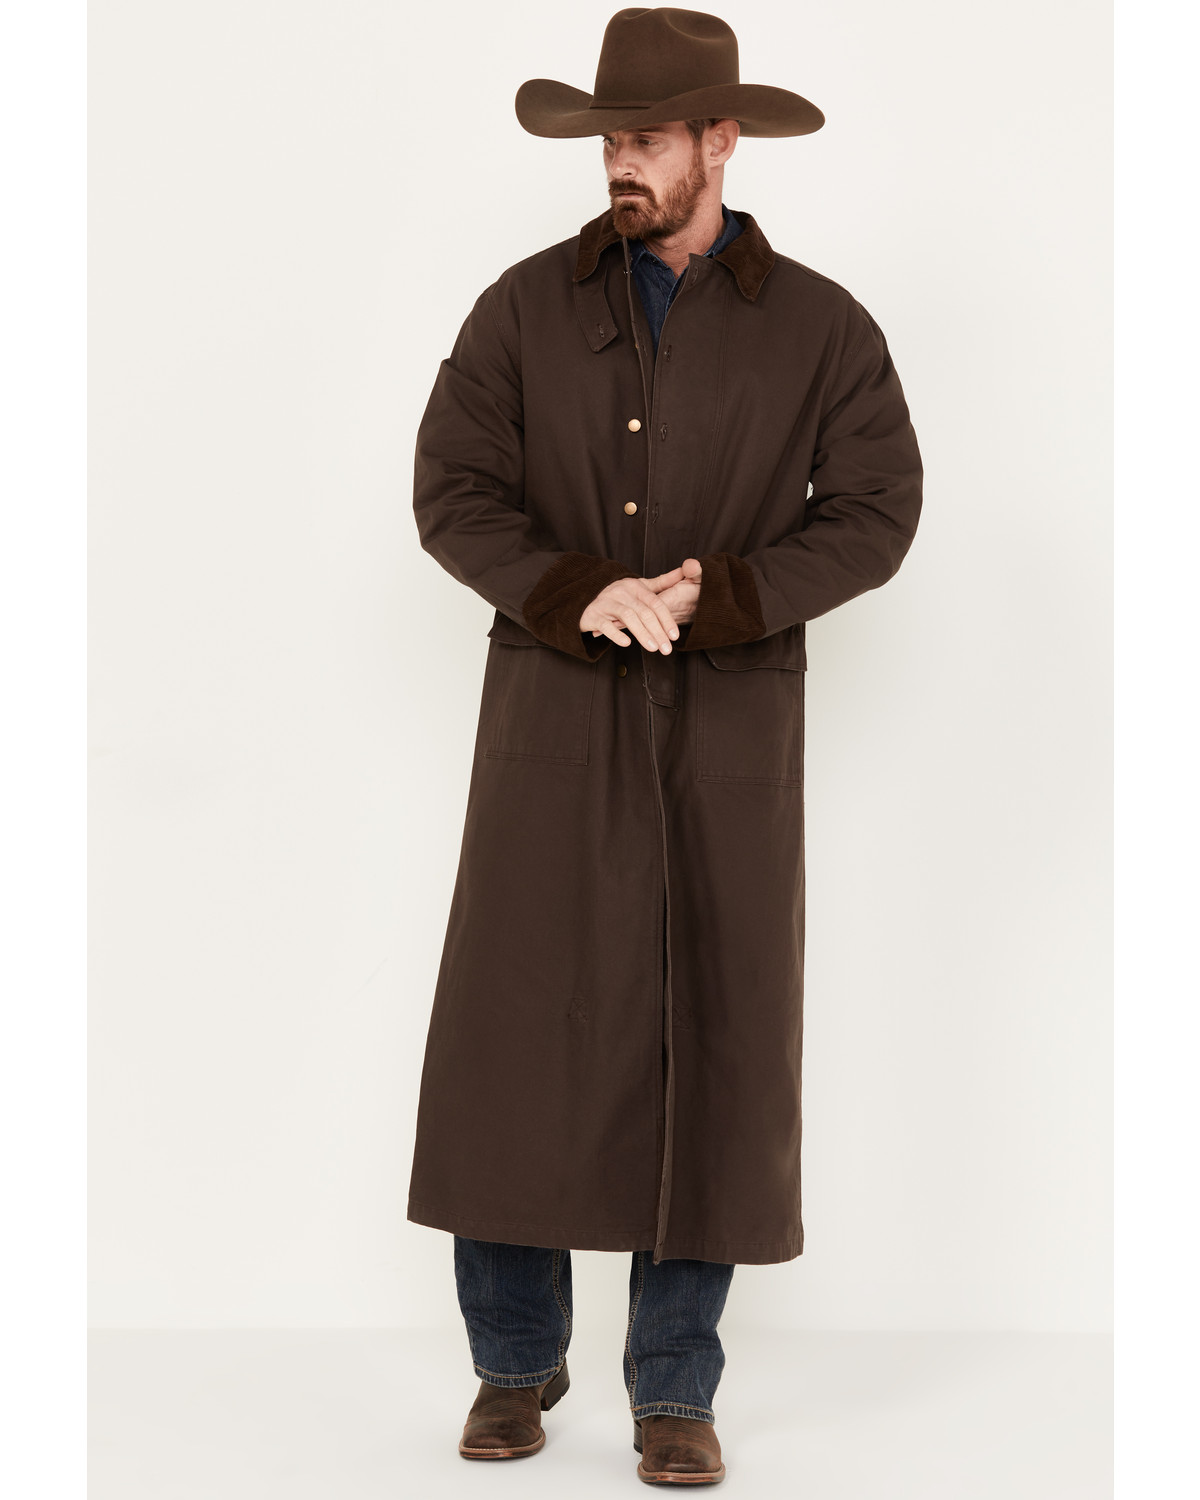 Men's Duster Coats & Drovers